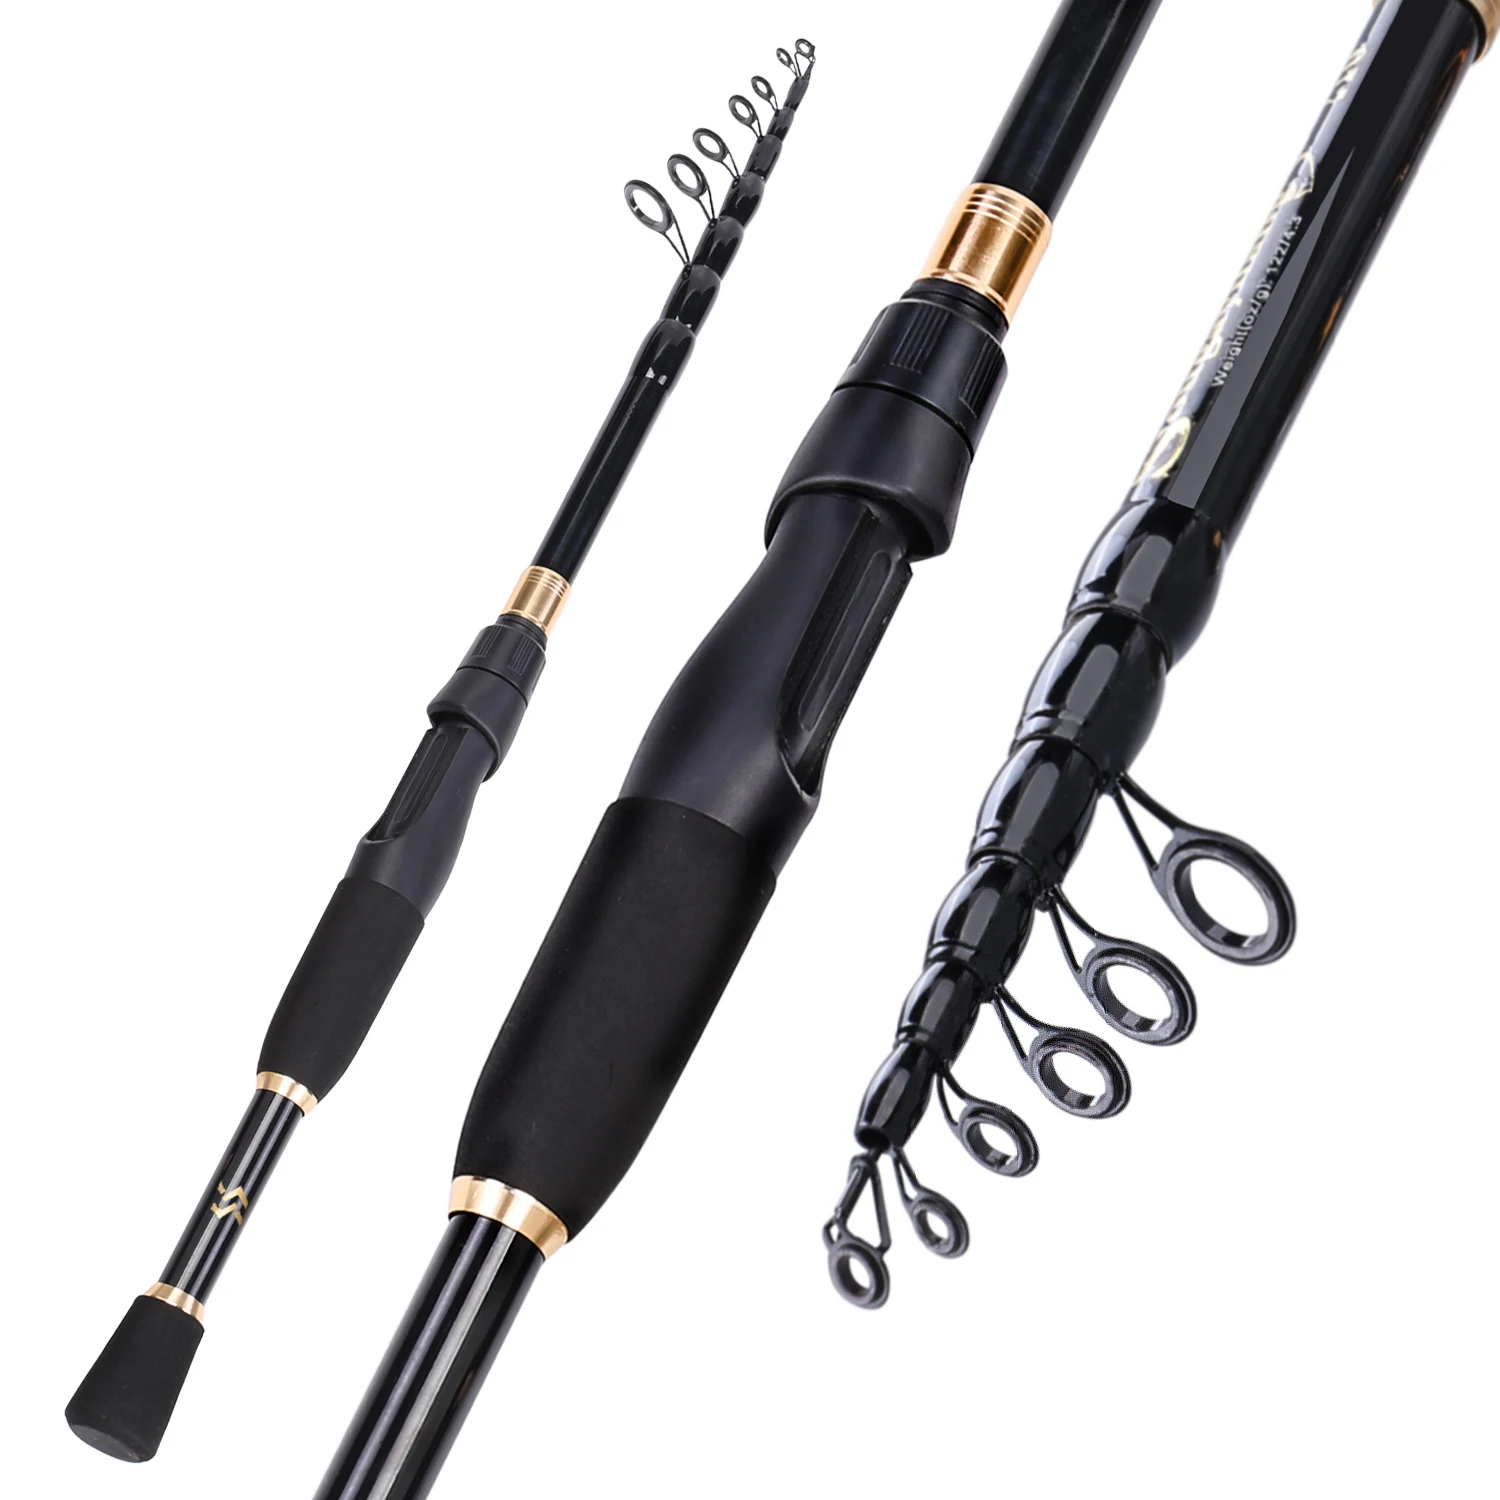 Sougayilang Carbon Fiber Spinning Casting Fishing Rod Ultralight Fishing Pole US 